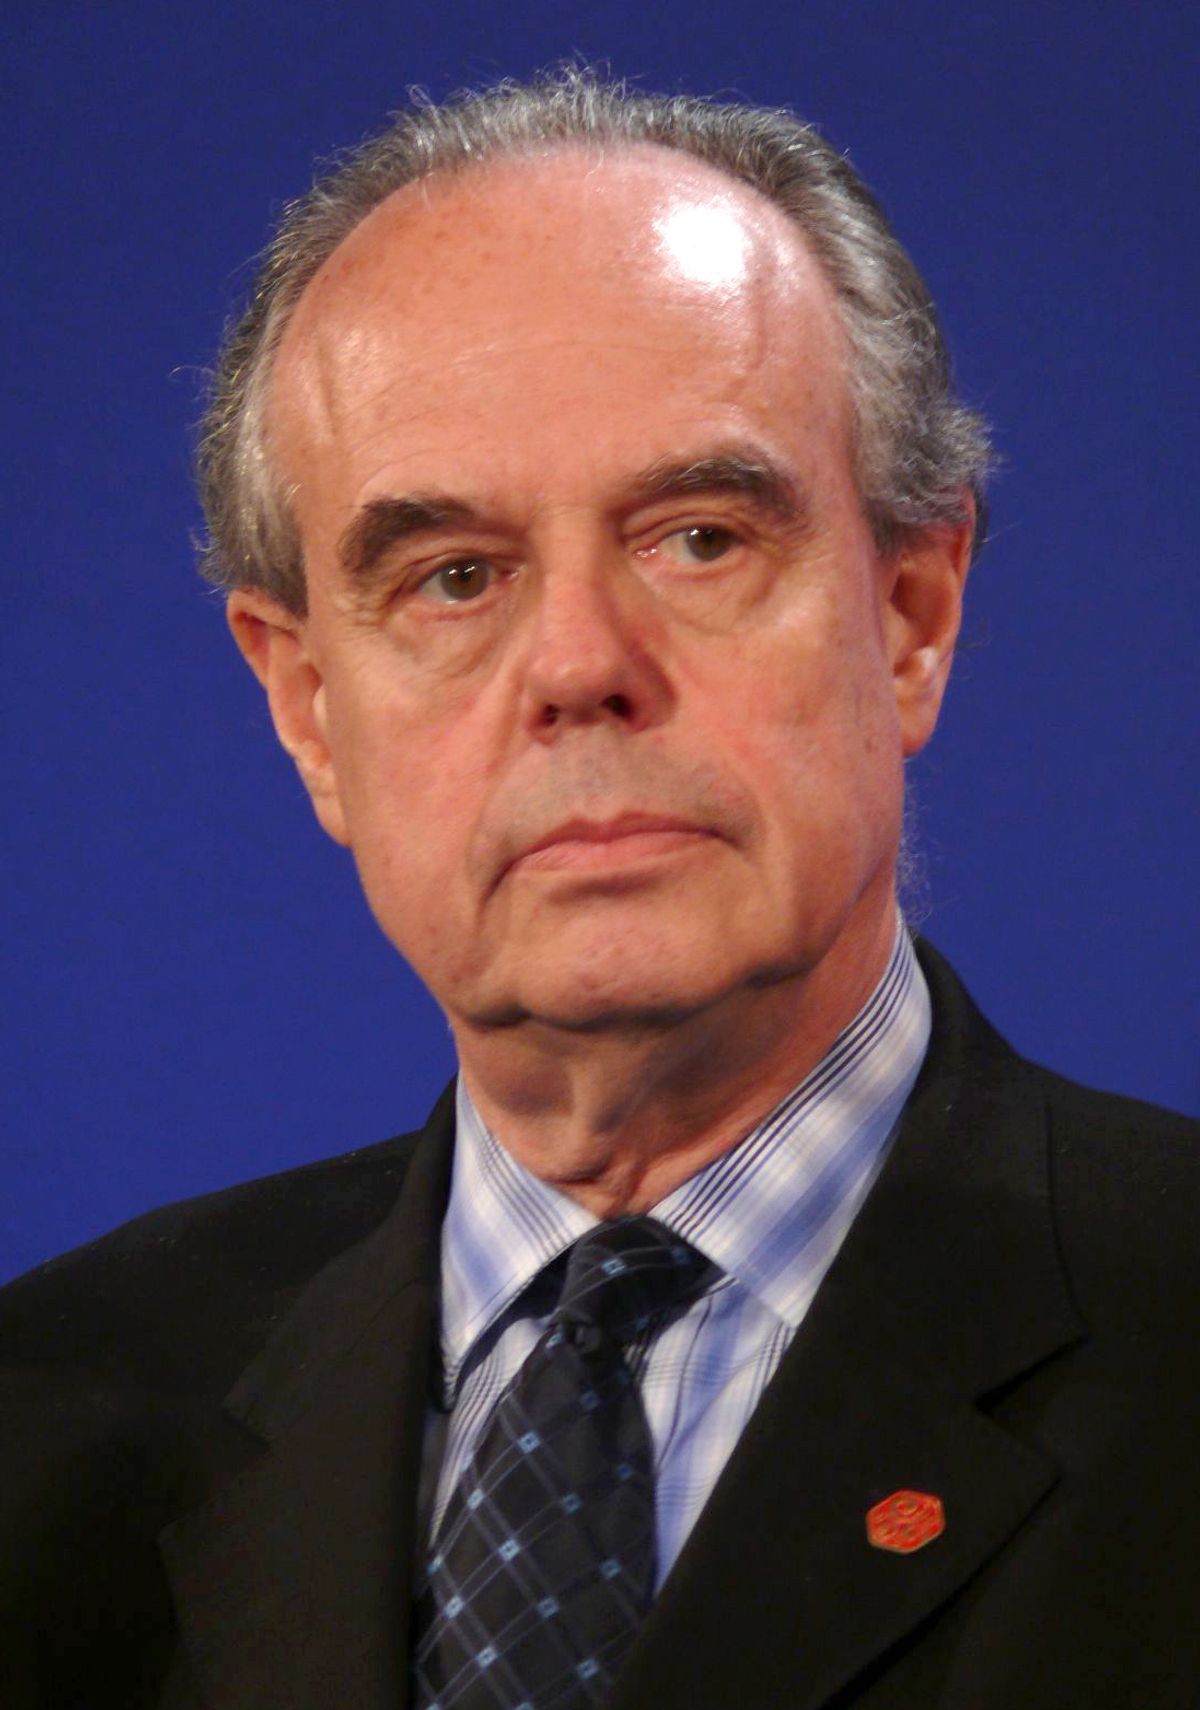 Frédéric Mitterrand en 2010. Photo : D.R.